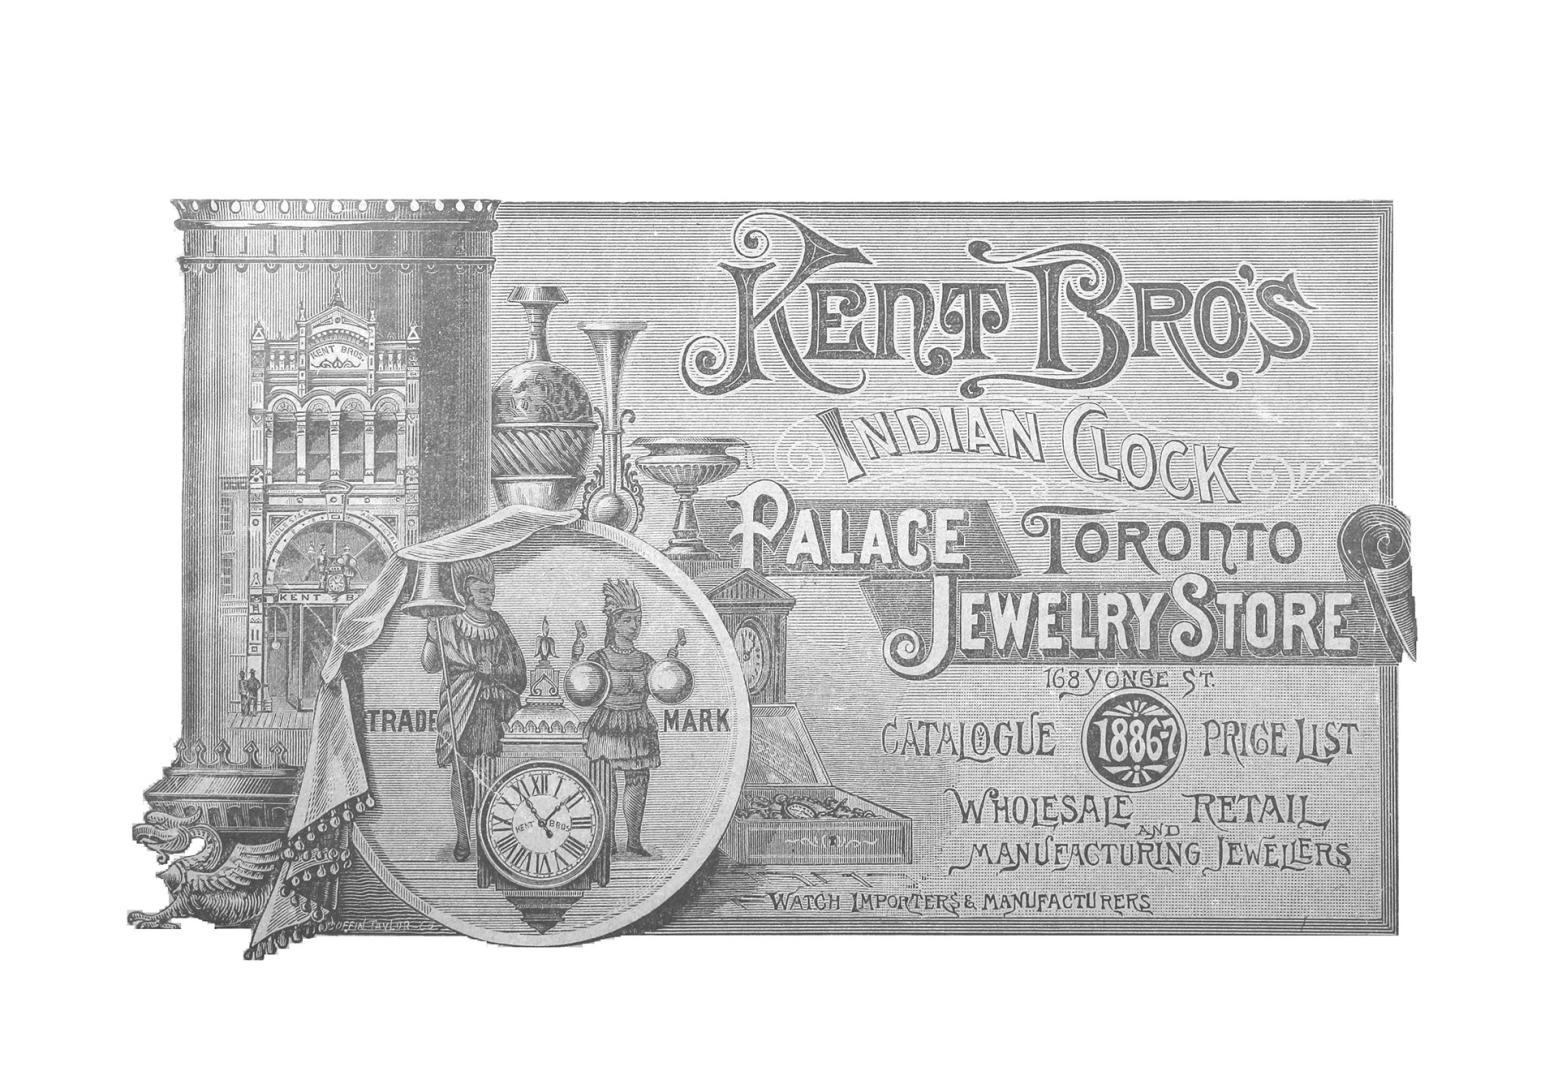 Indian clock palace jewelry store, Toronto ... : catalogue...price list